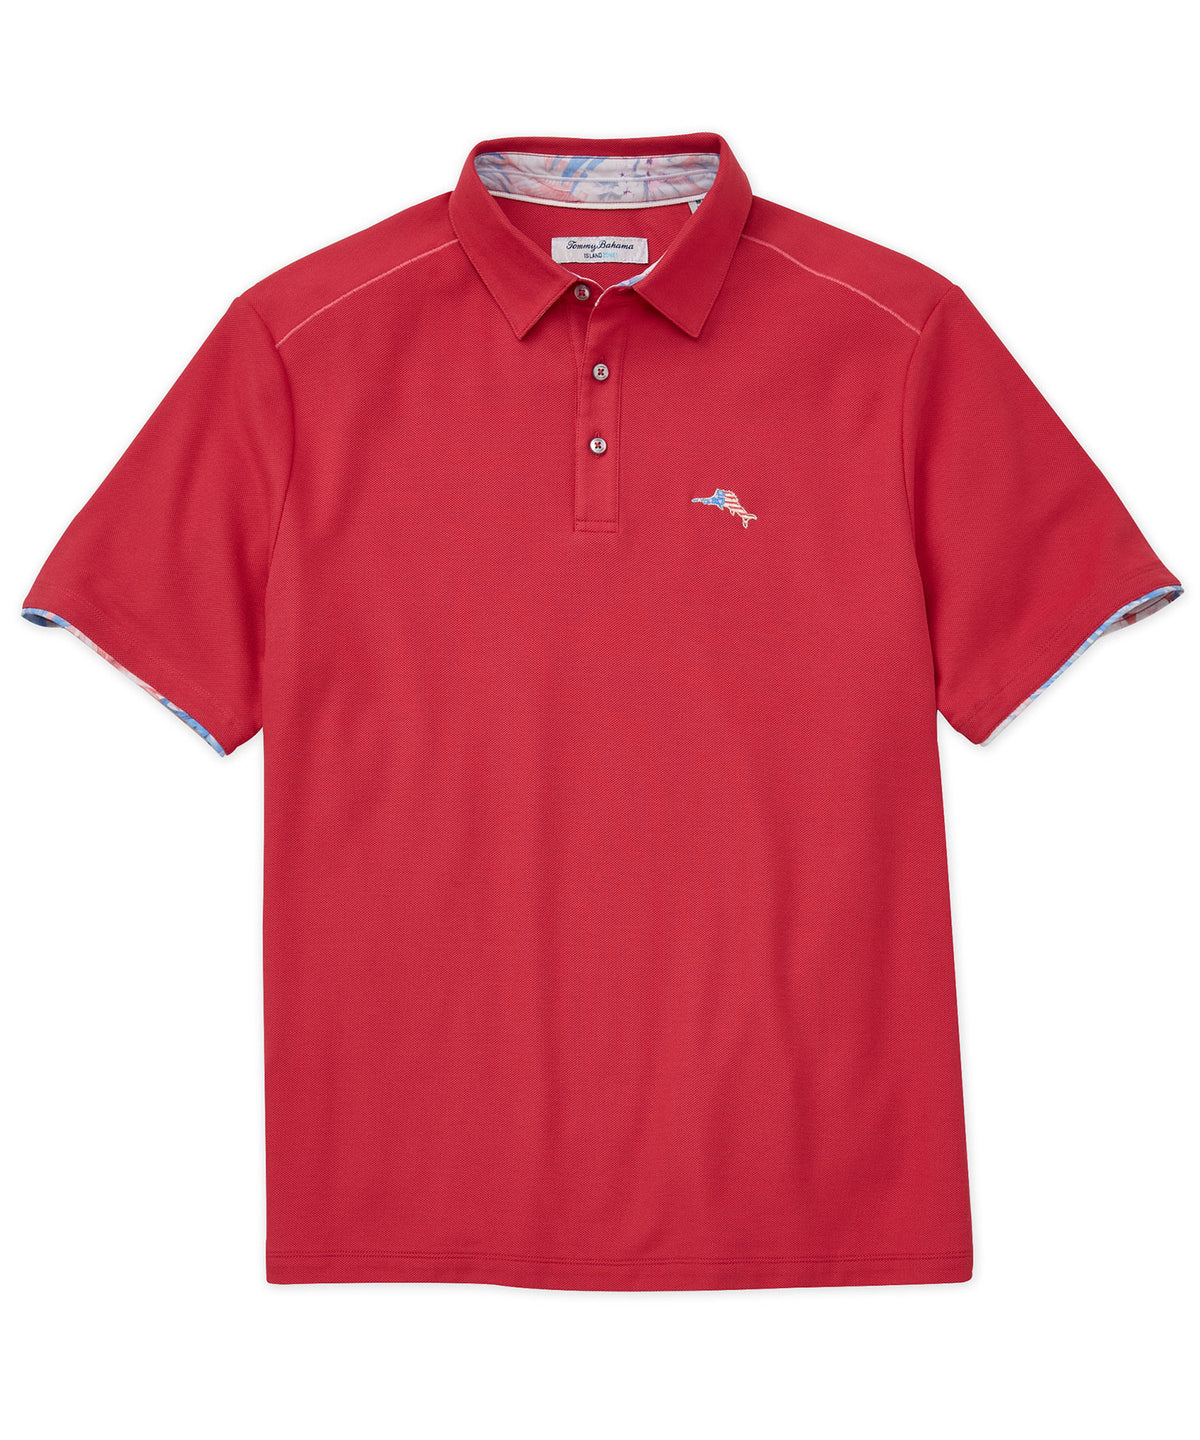 Tommy Bahama Short Sleeve Breeze Blooms 5 O'clock Polo Knit Shirt, Big & Tall